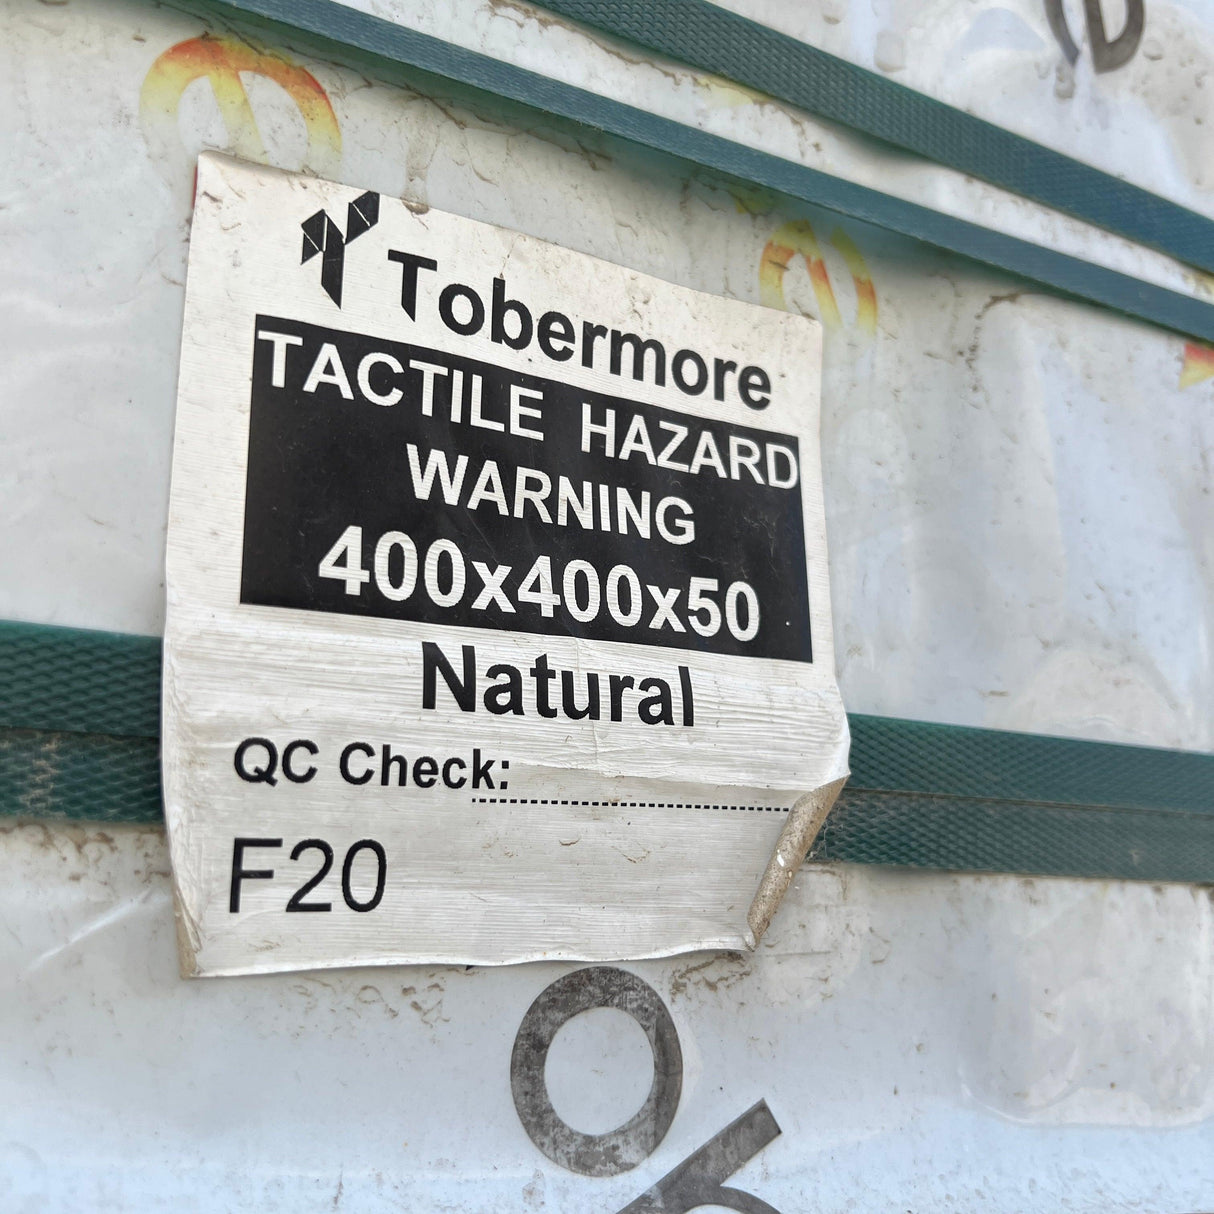 New Tobermore Hazard Warning Grey Paving Slabs - Reclaimed Brick Company